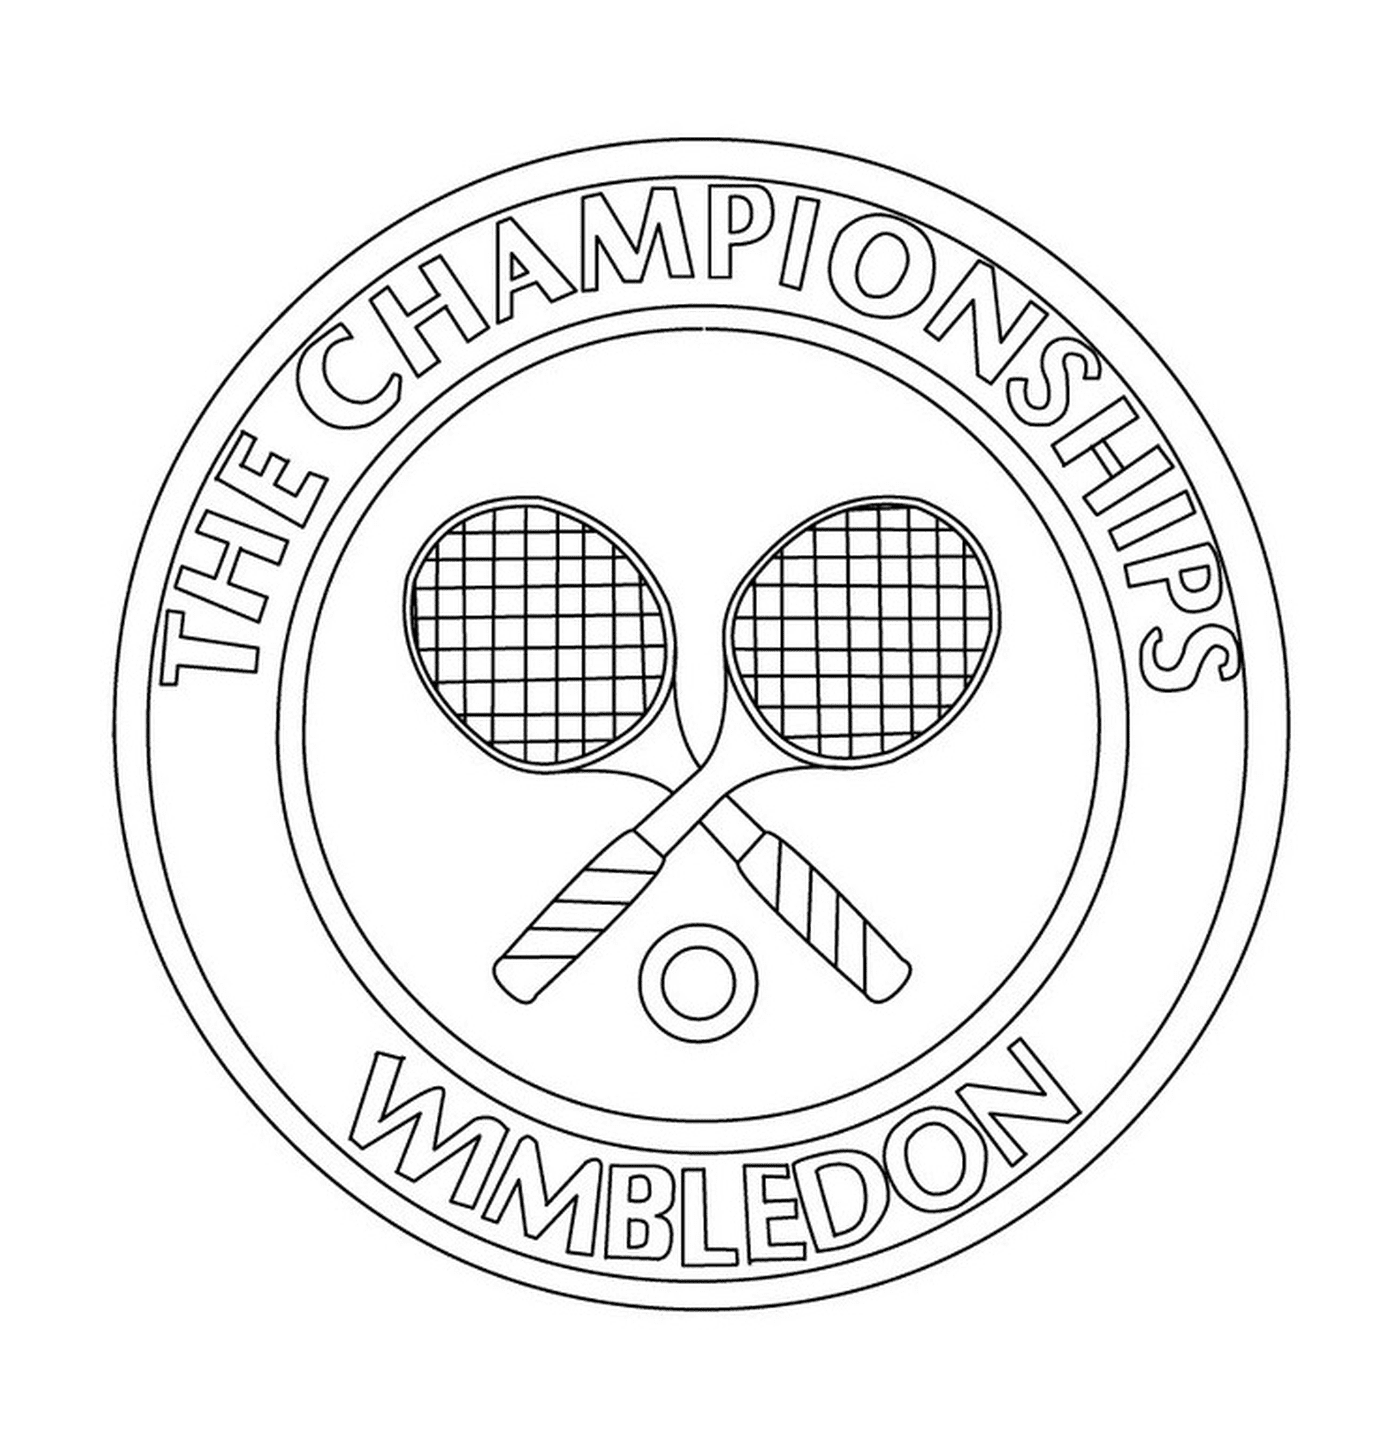   logo tennis The Championships Wimbledon 